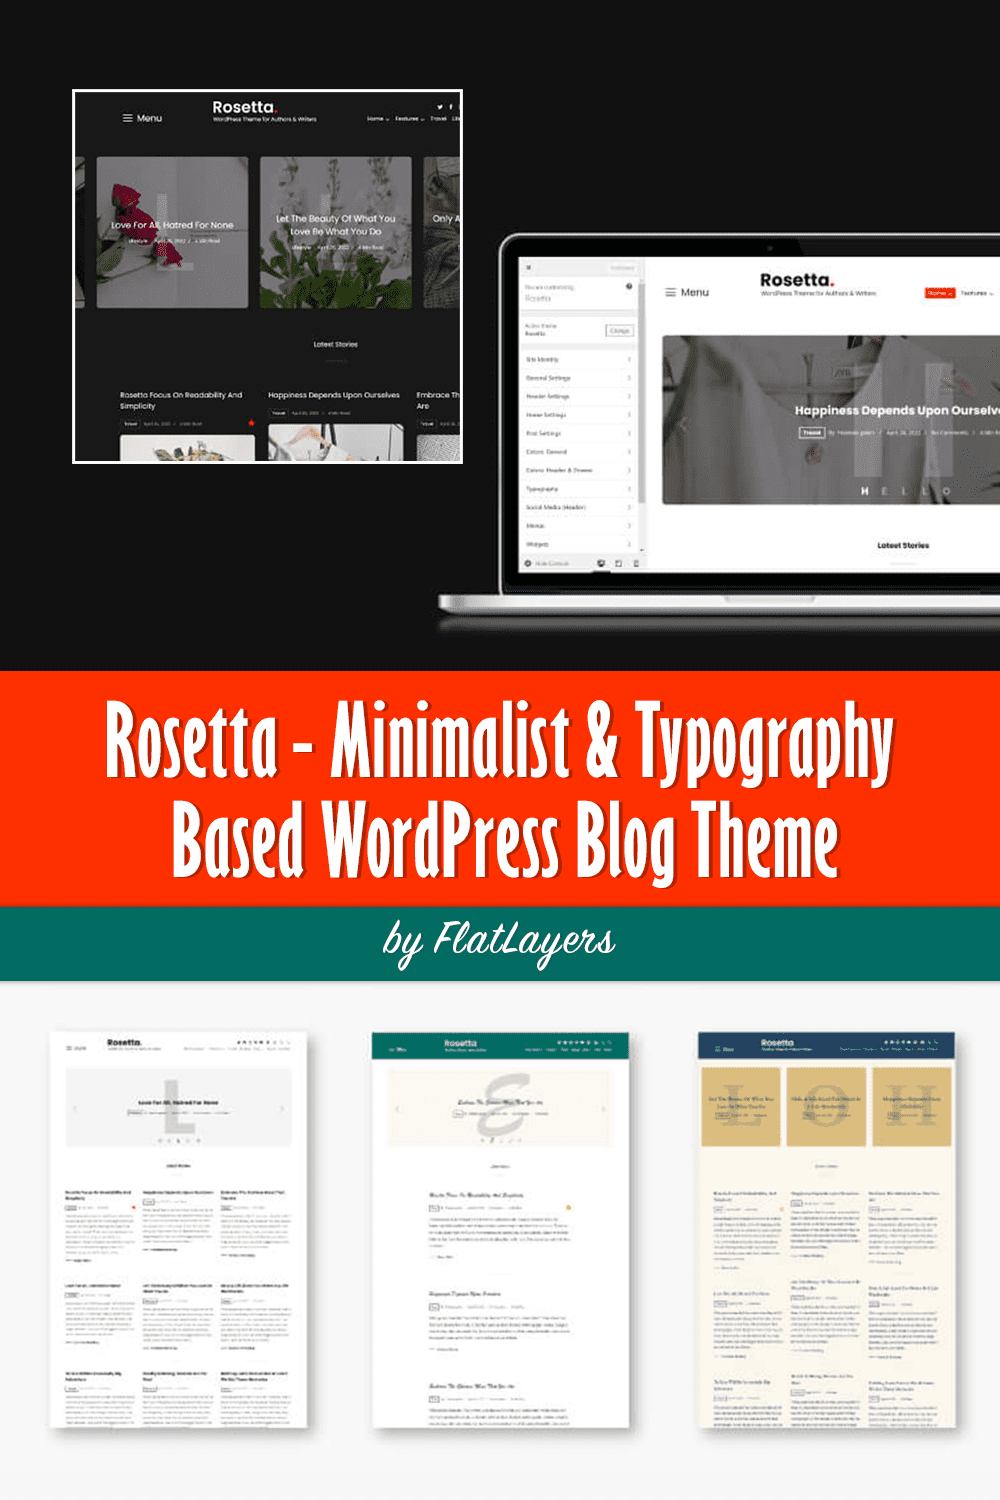 Rosetta is a minimalist and typography-based WordPress blog theme.